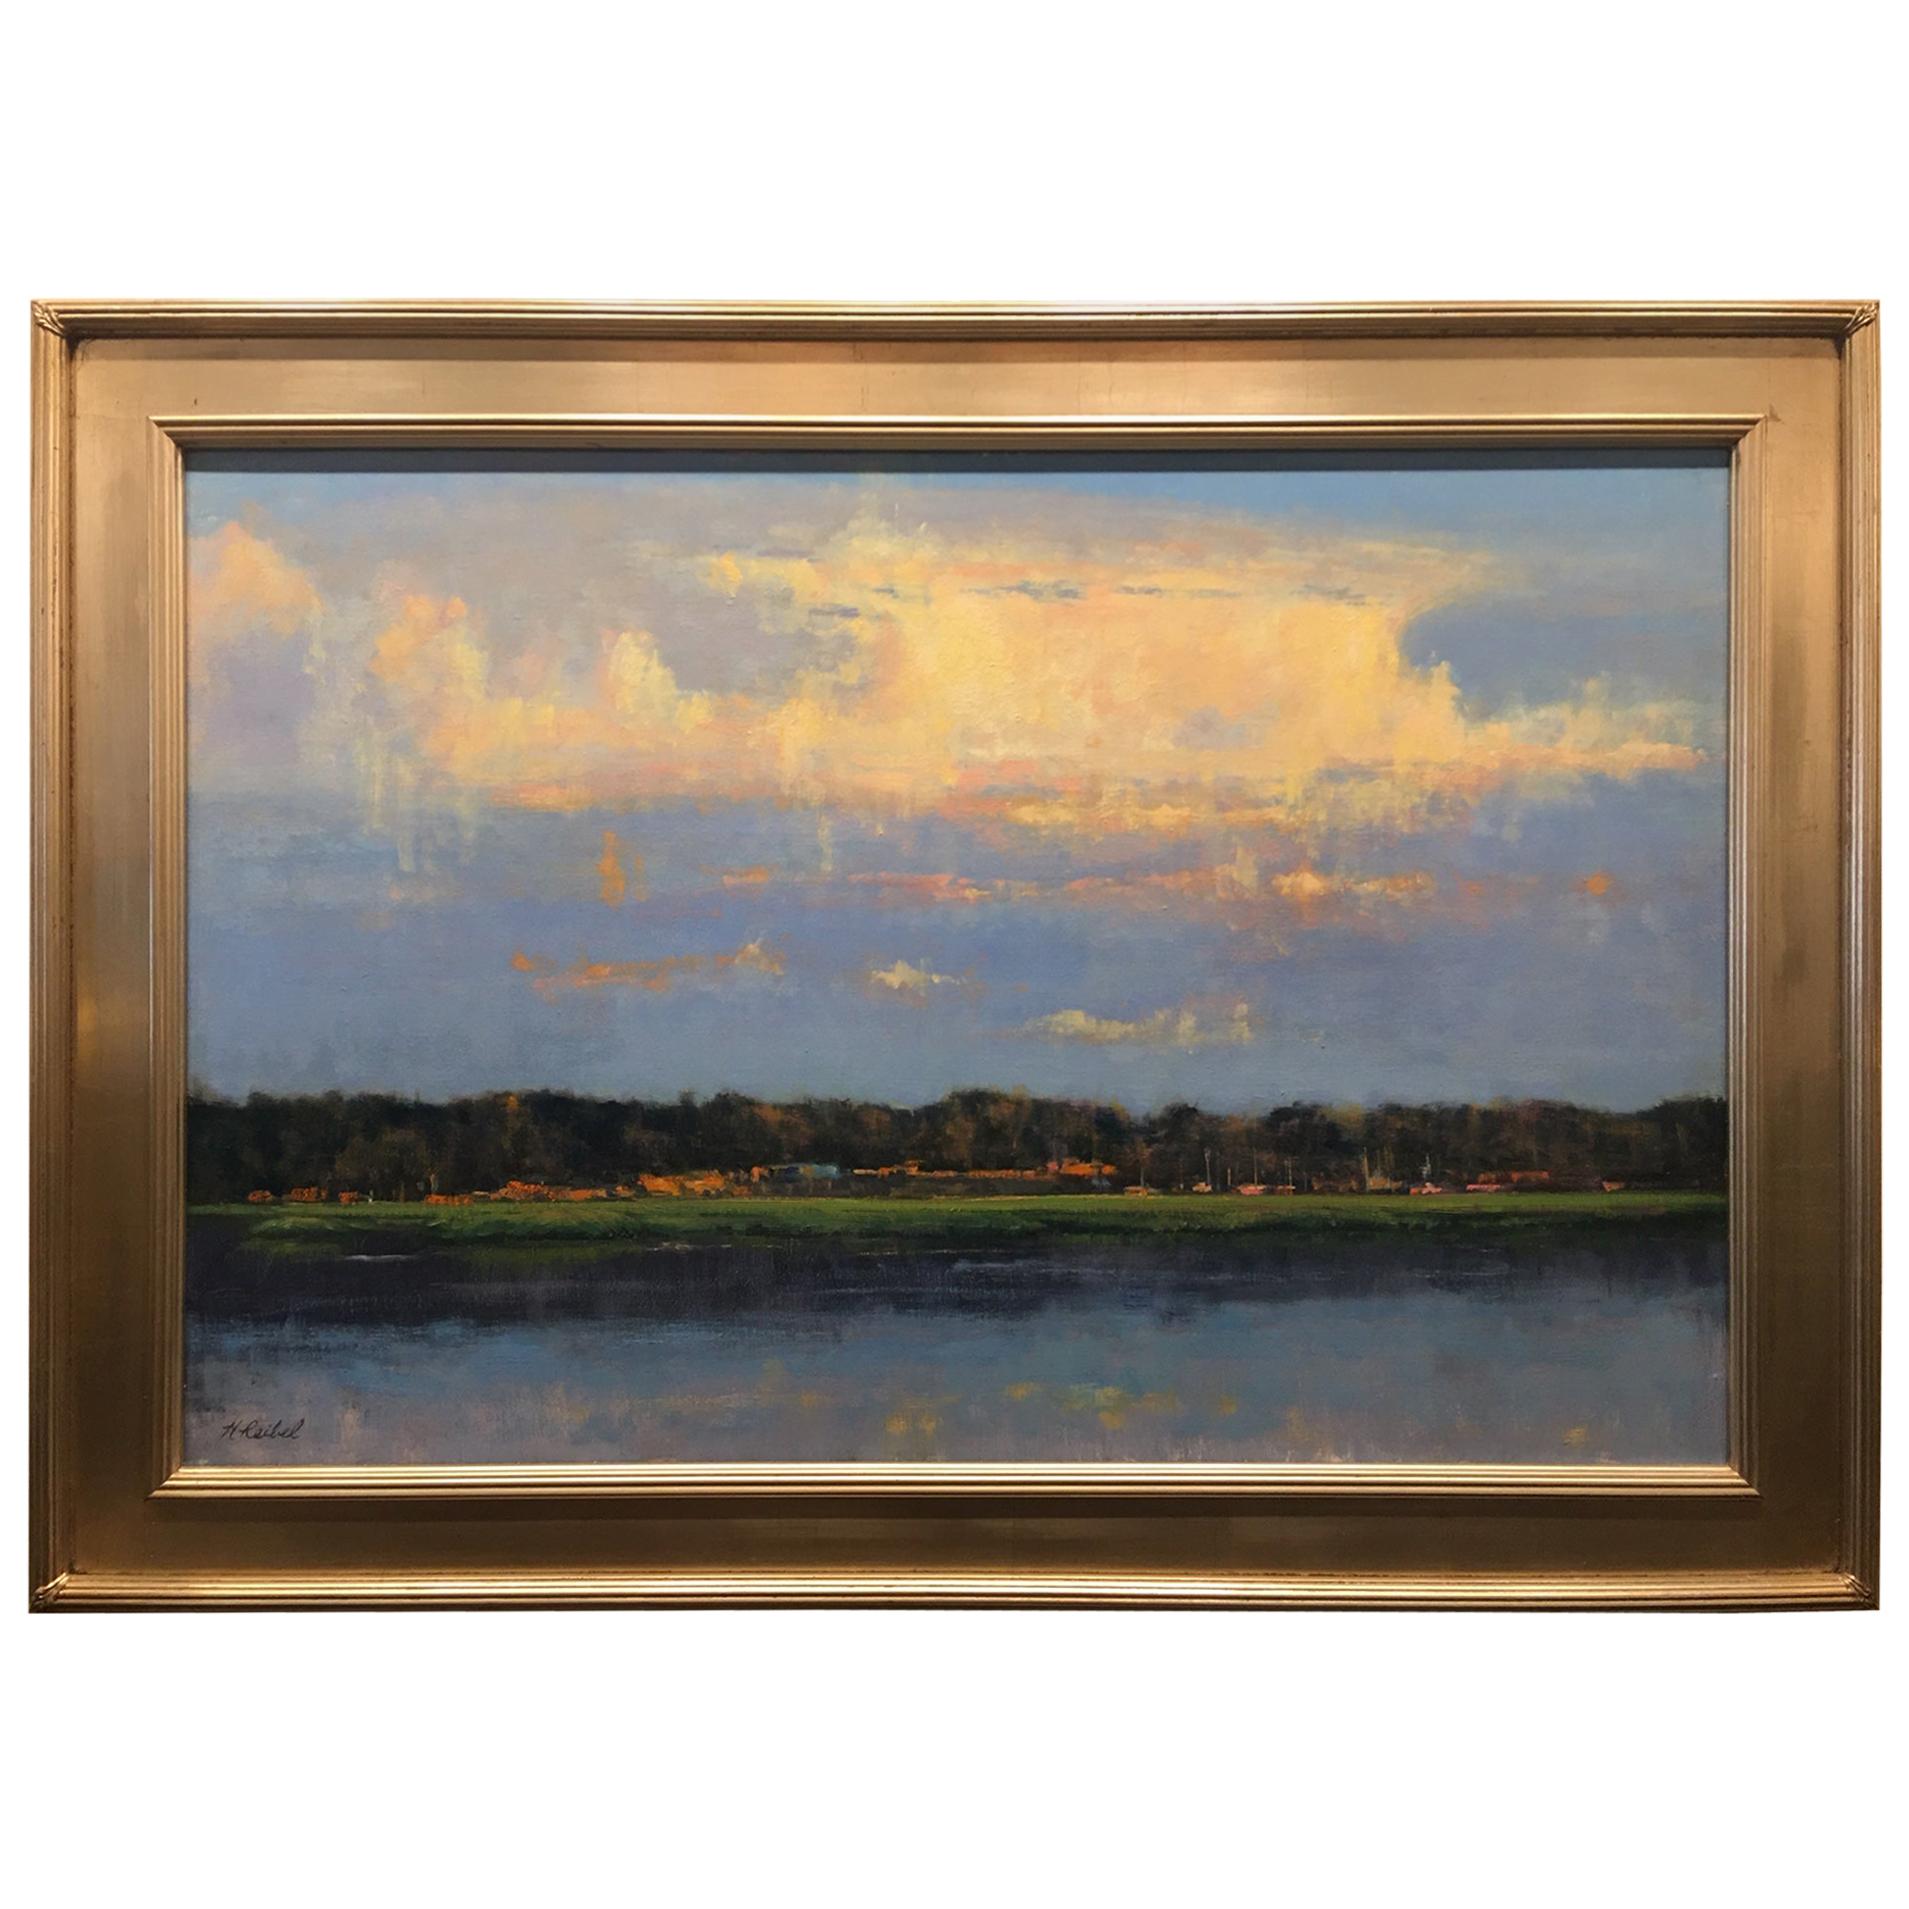 Oil on Linen Painting "Evening Cloudscape over Pelican Point", Michael Reibel